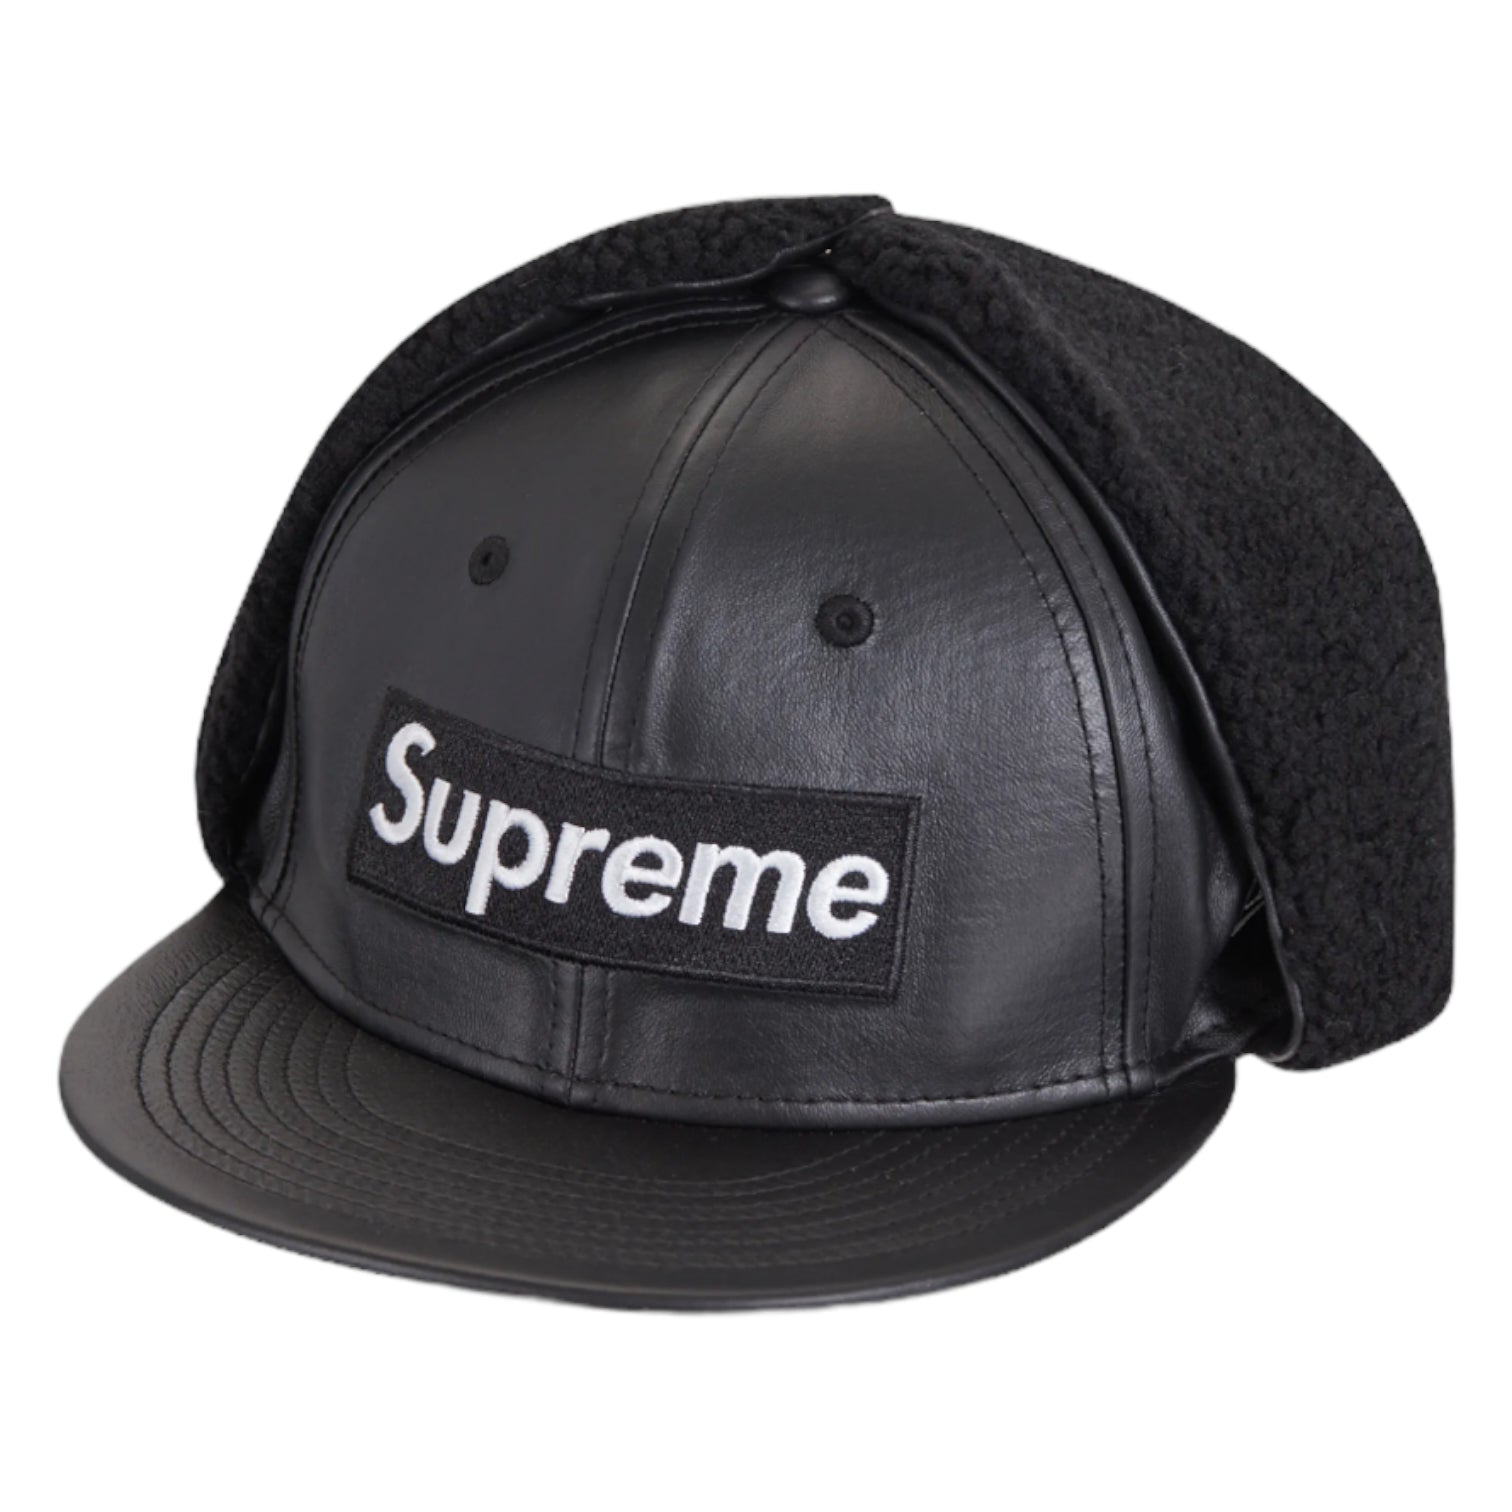 Supreme Leather Earflap Box Logo New Era Black